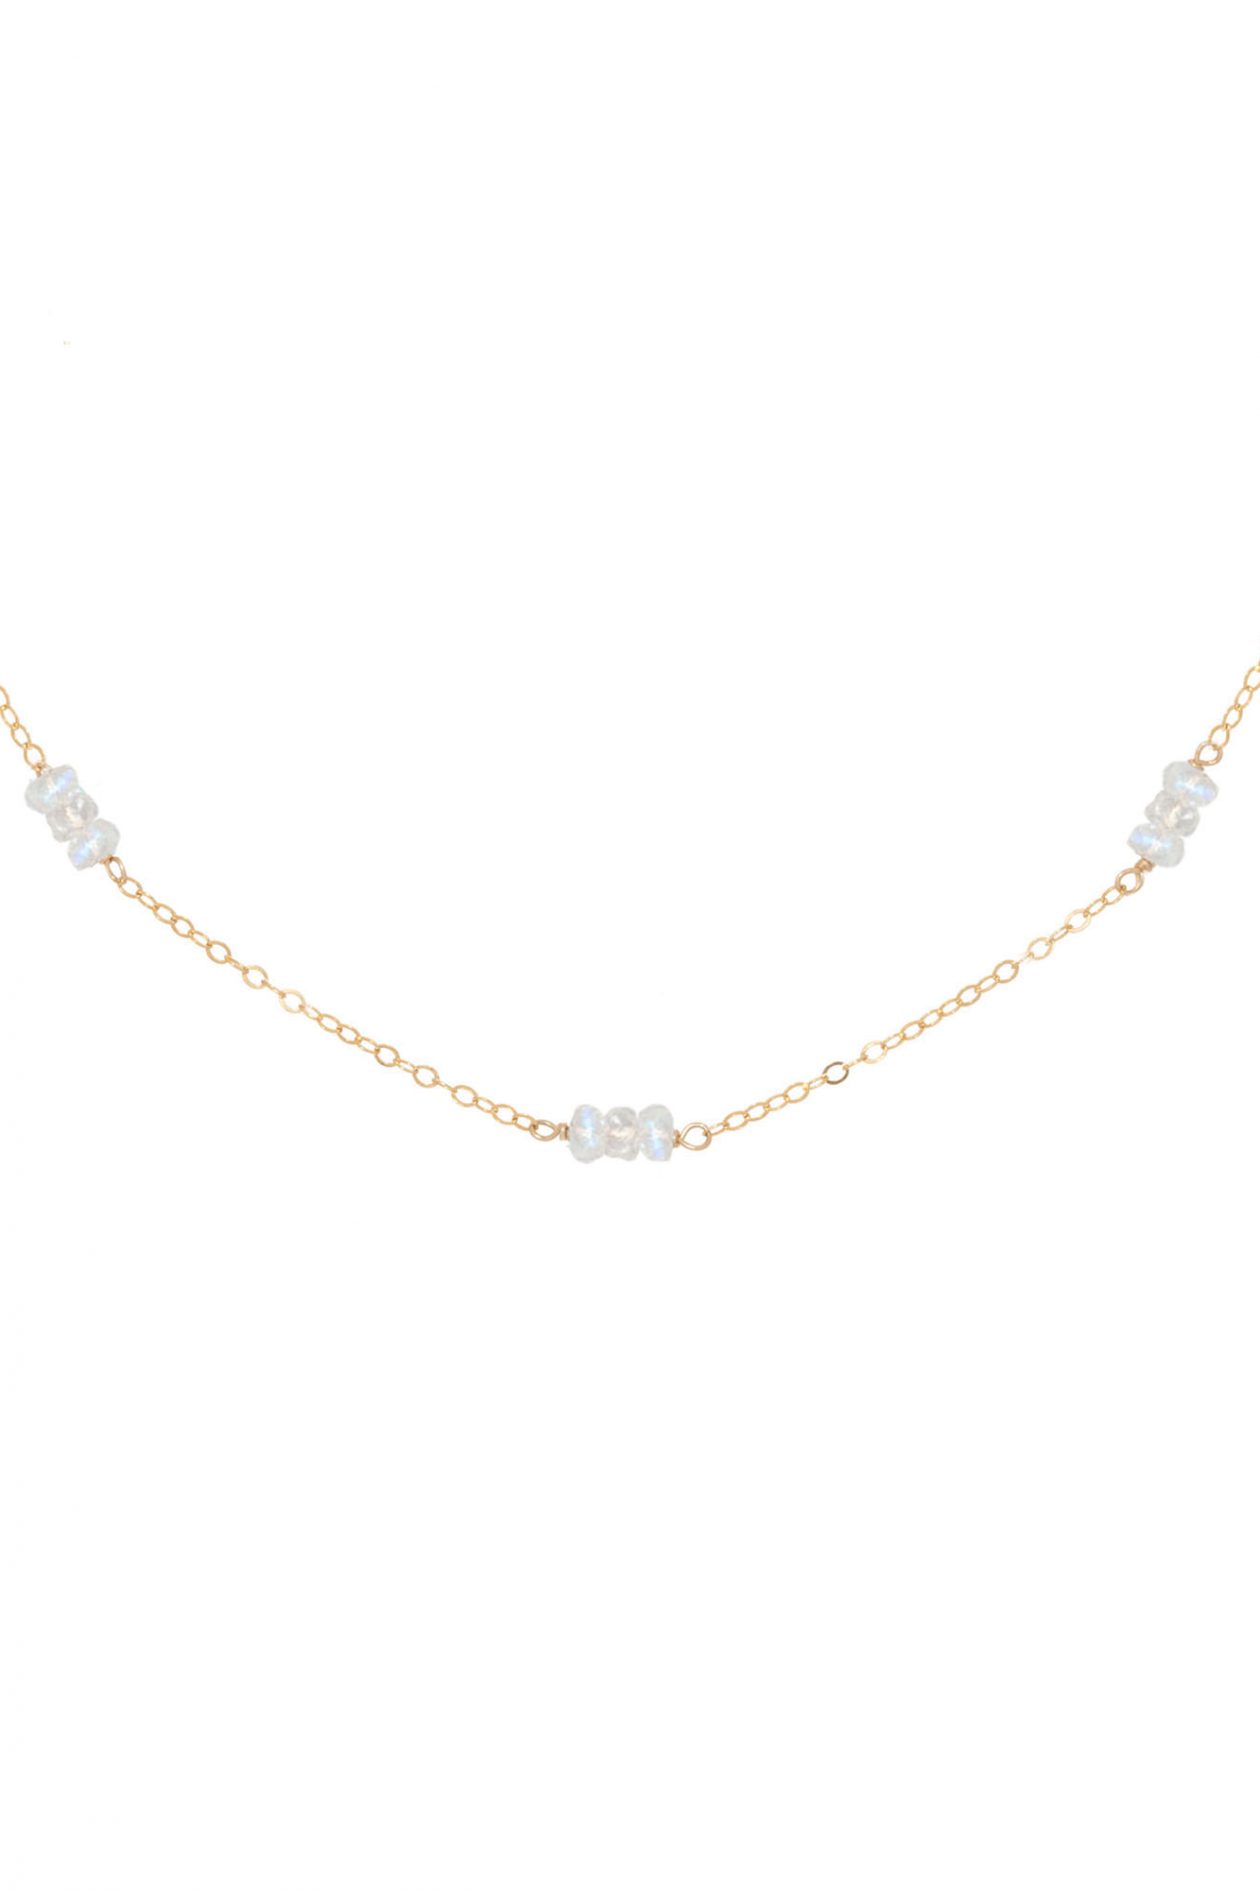 9 Stone Necklace - JK Designs Jewelry